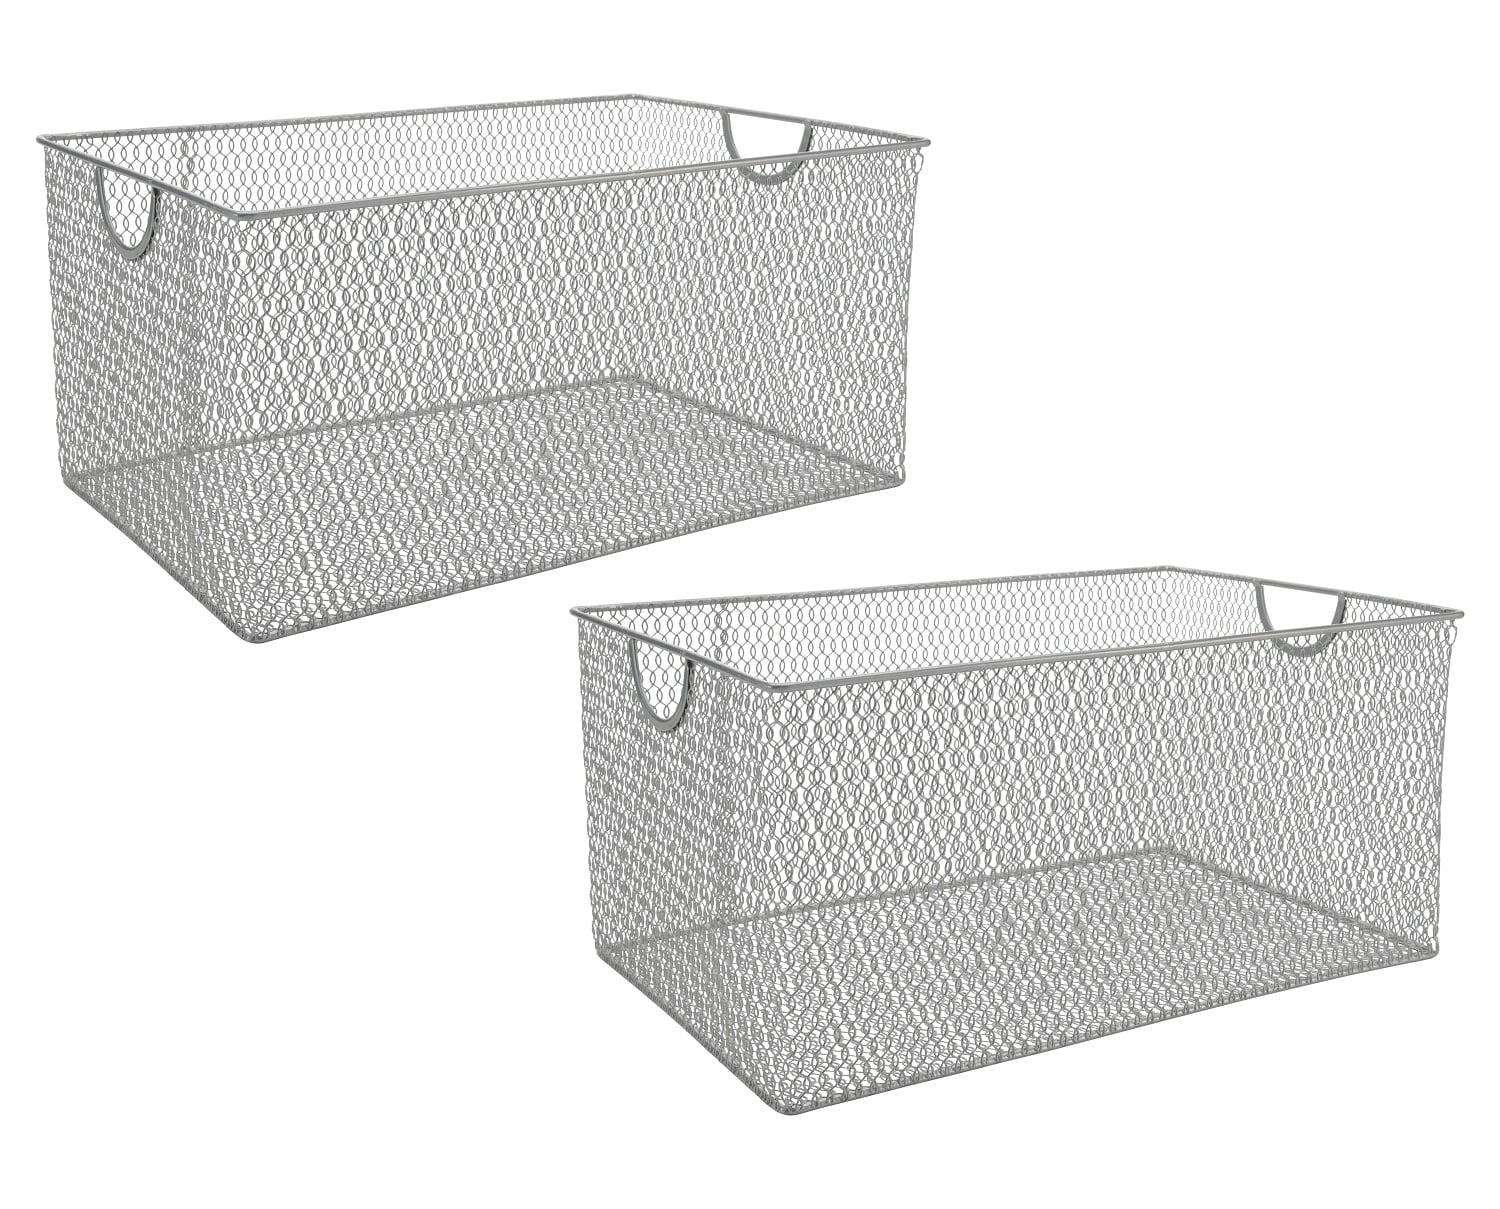 YBM Home Wire Mesh Storage Basket Organizer with Handles, Adult Silver 12 x  7.8 x 5.8